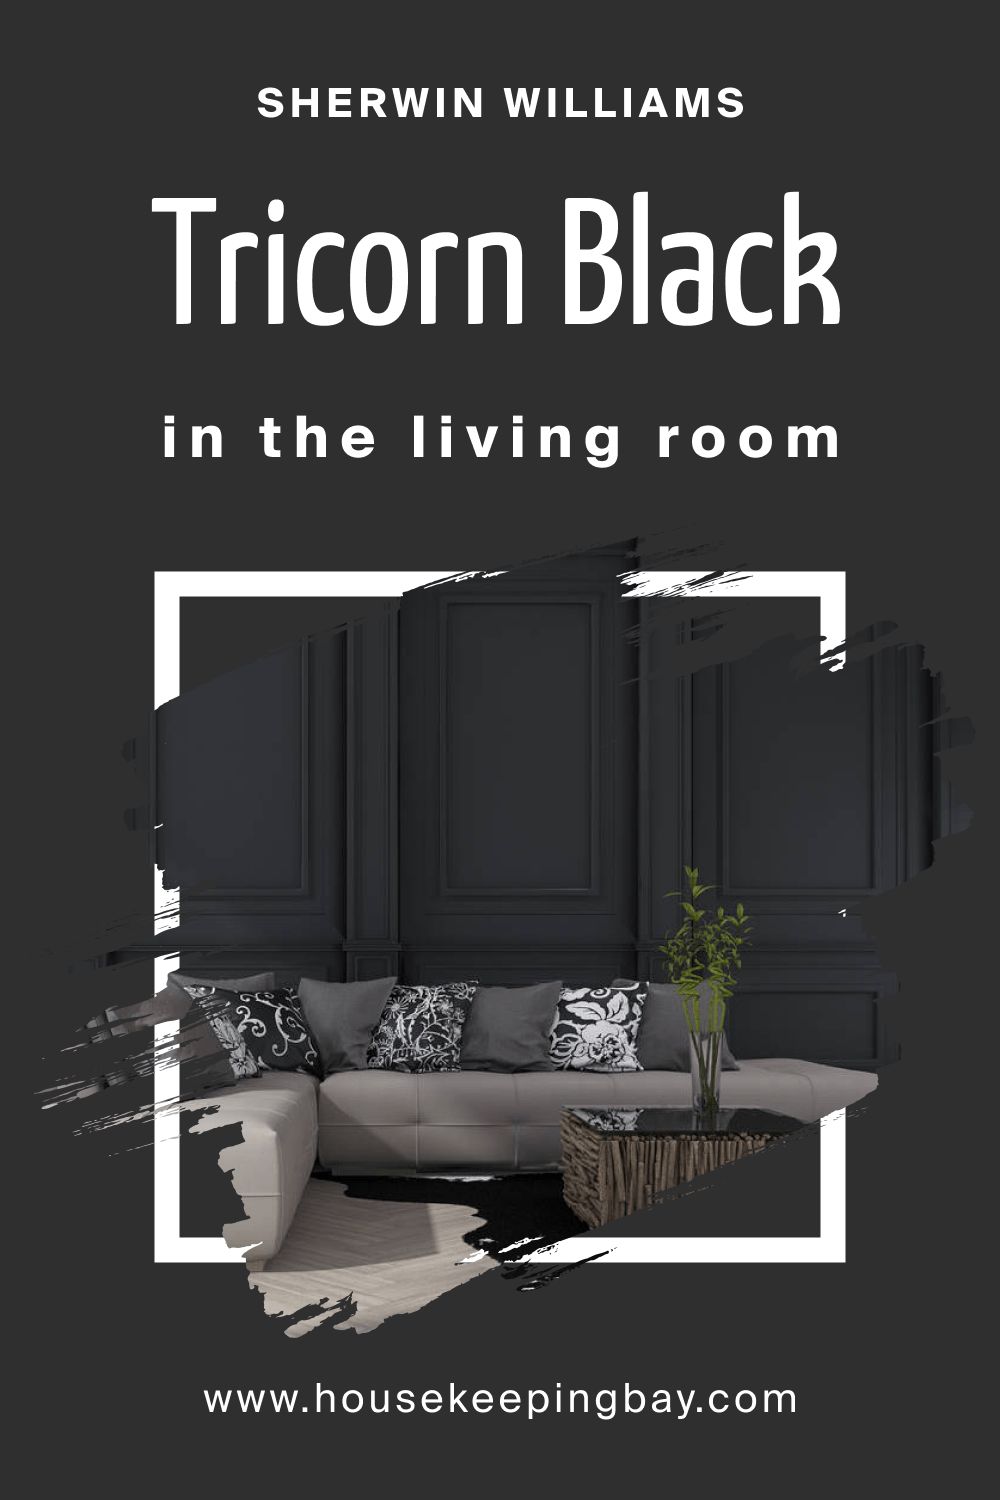 Sherwin Williams. SW 6258 Tricorn Black In the Living Room